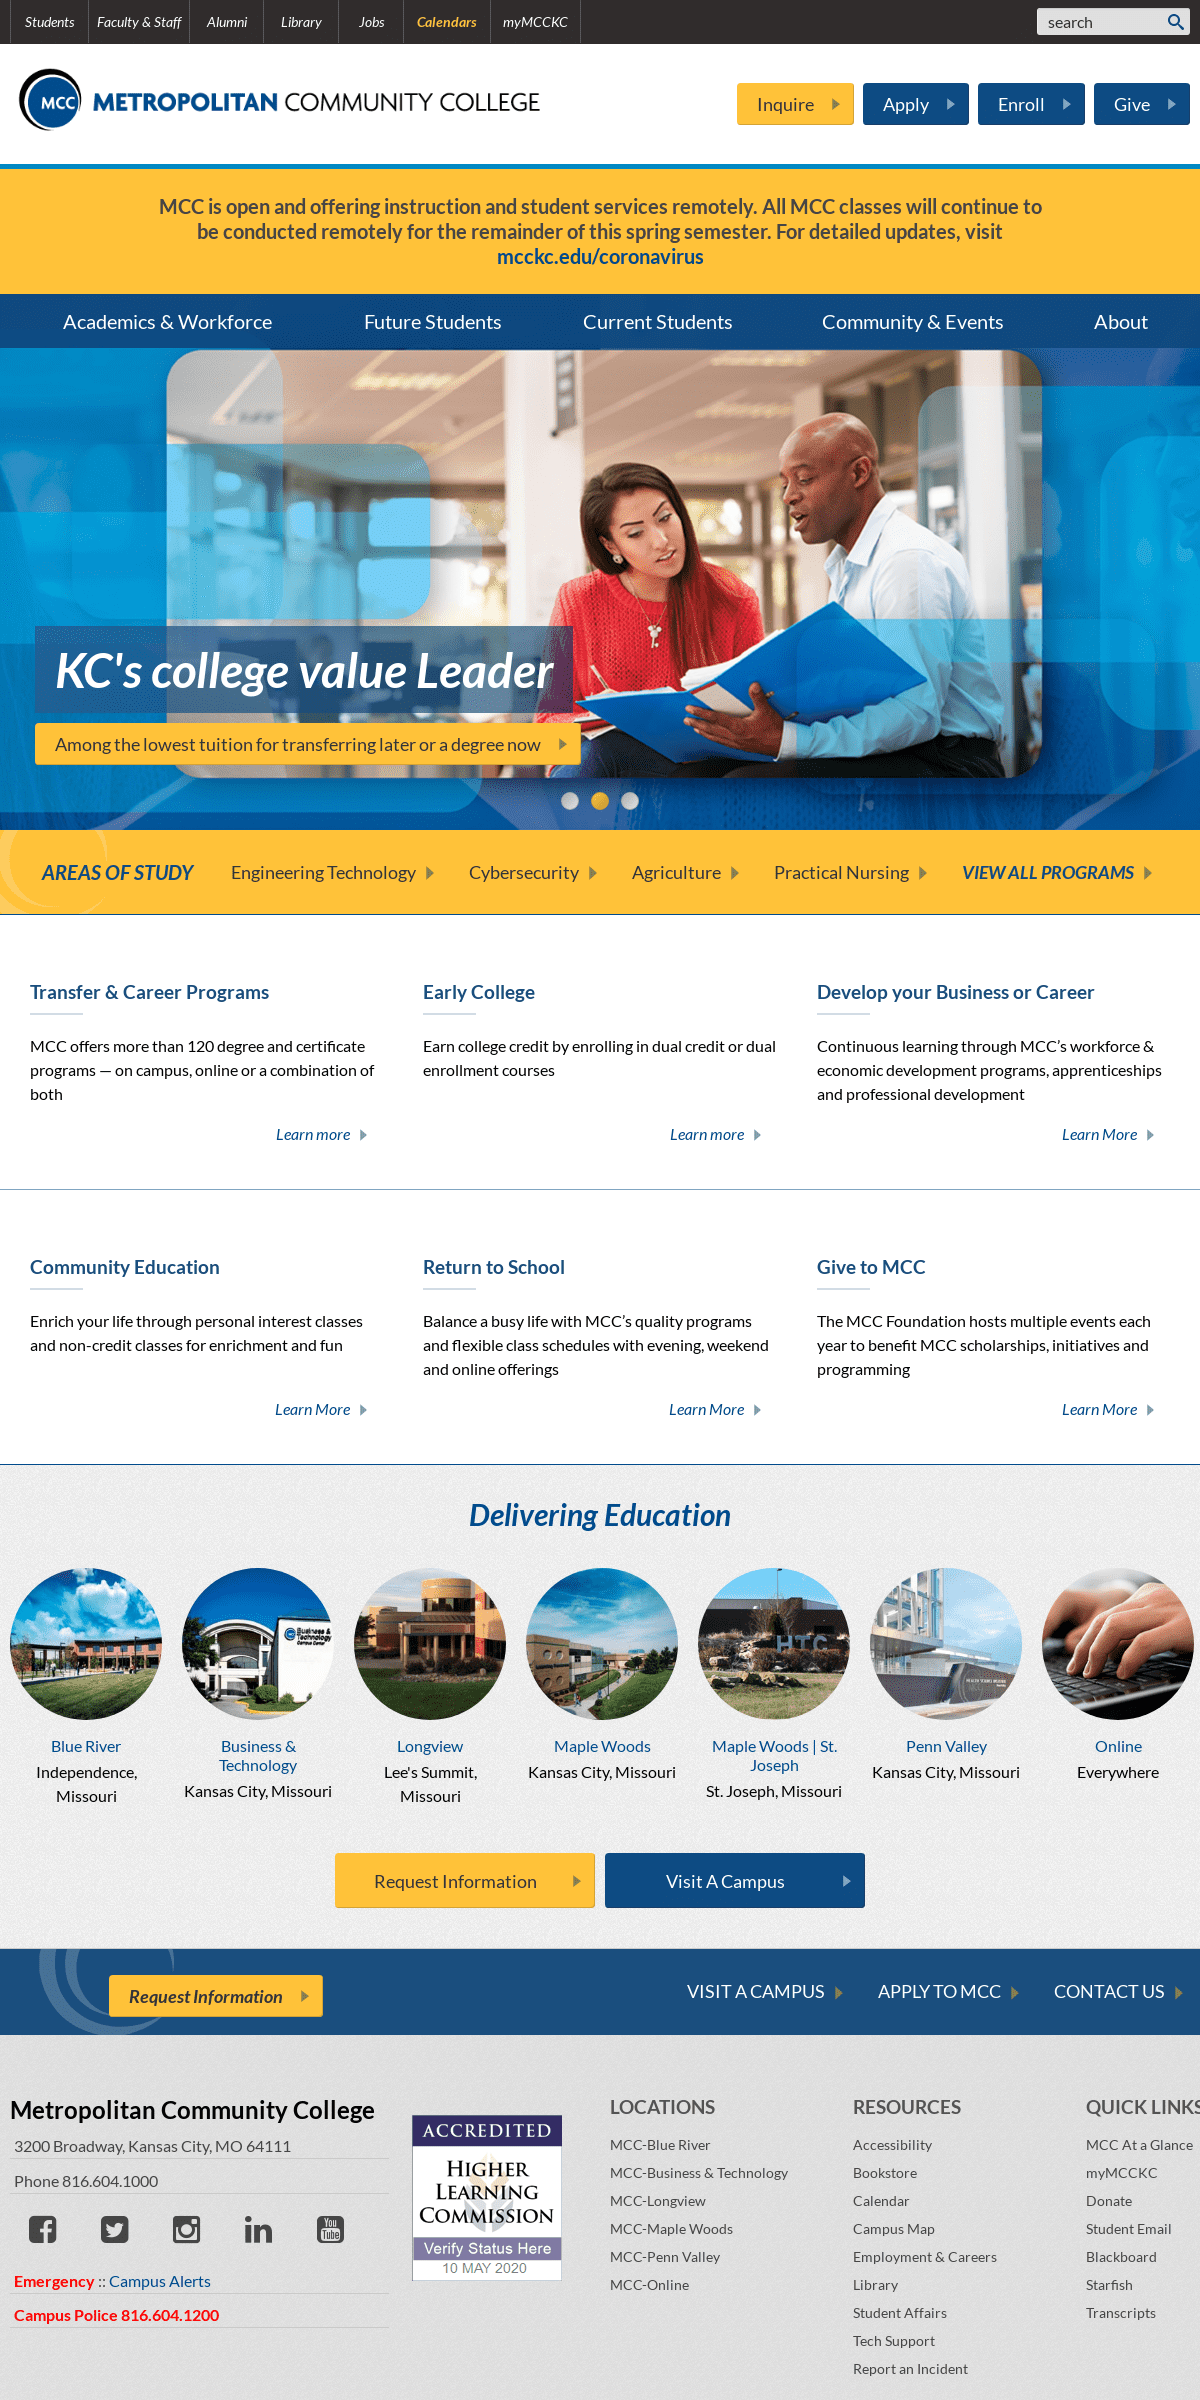 A complete backup of mcckc.edu